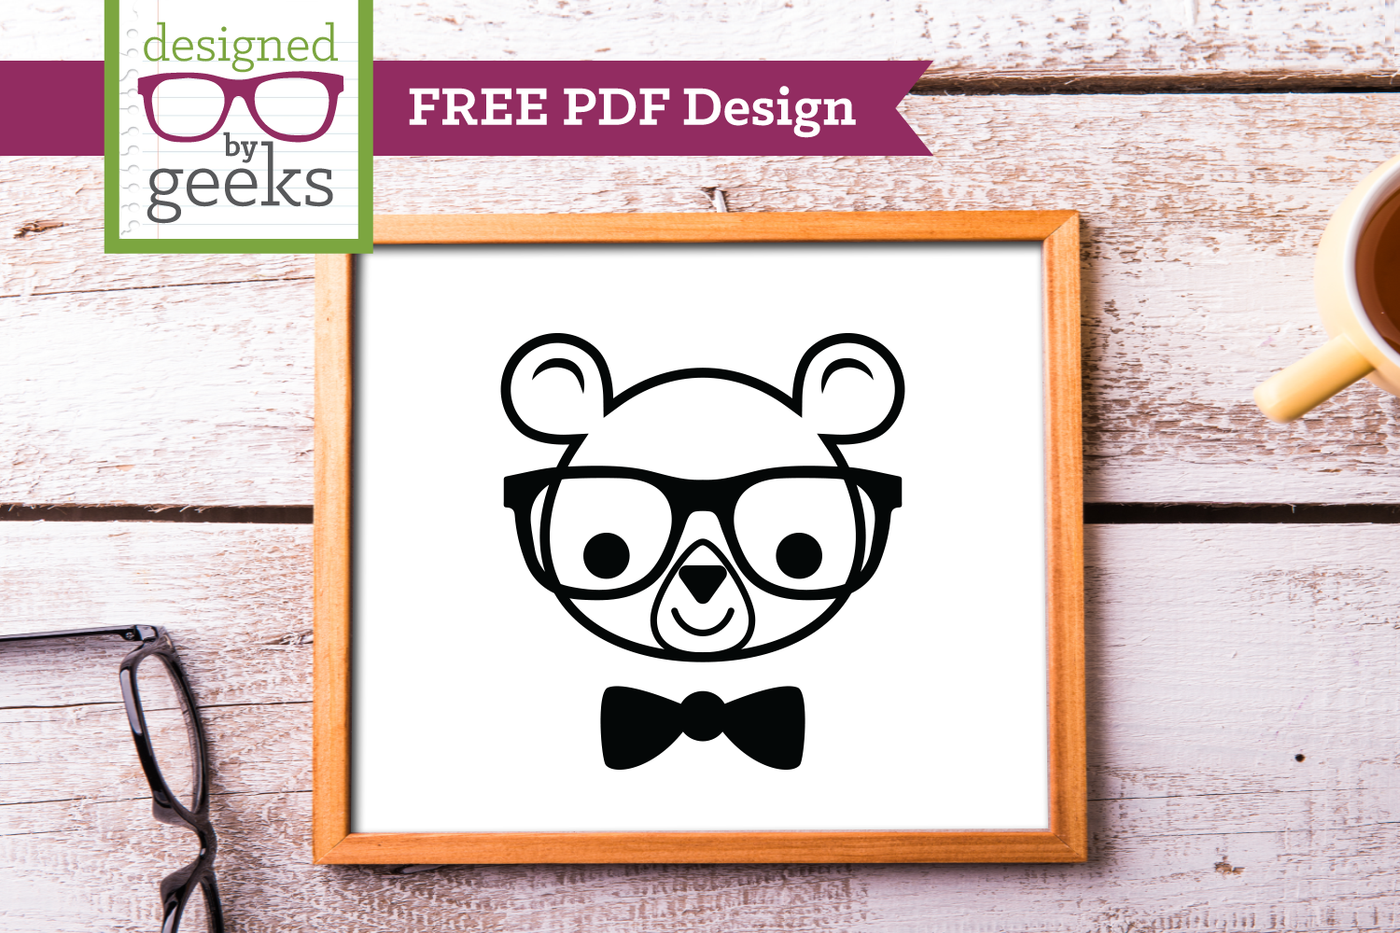 Nerd bear free PDF design